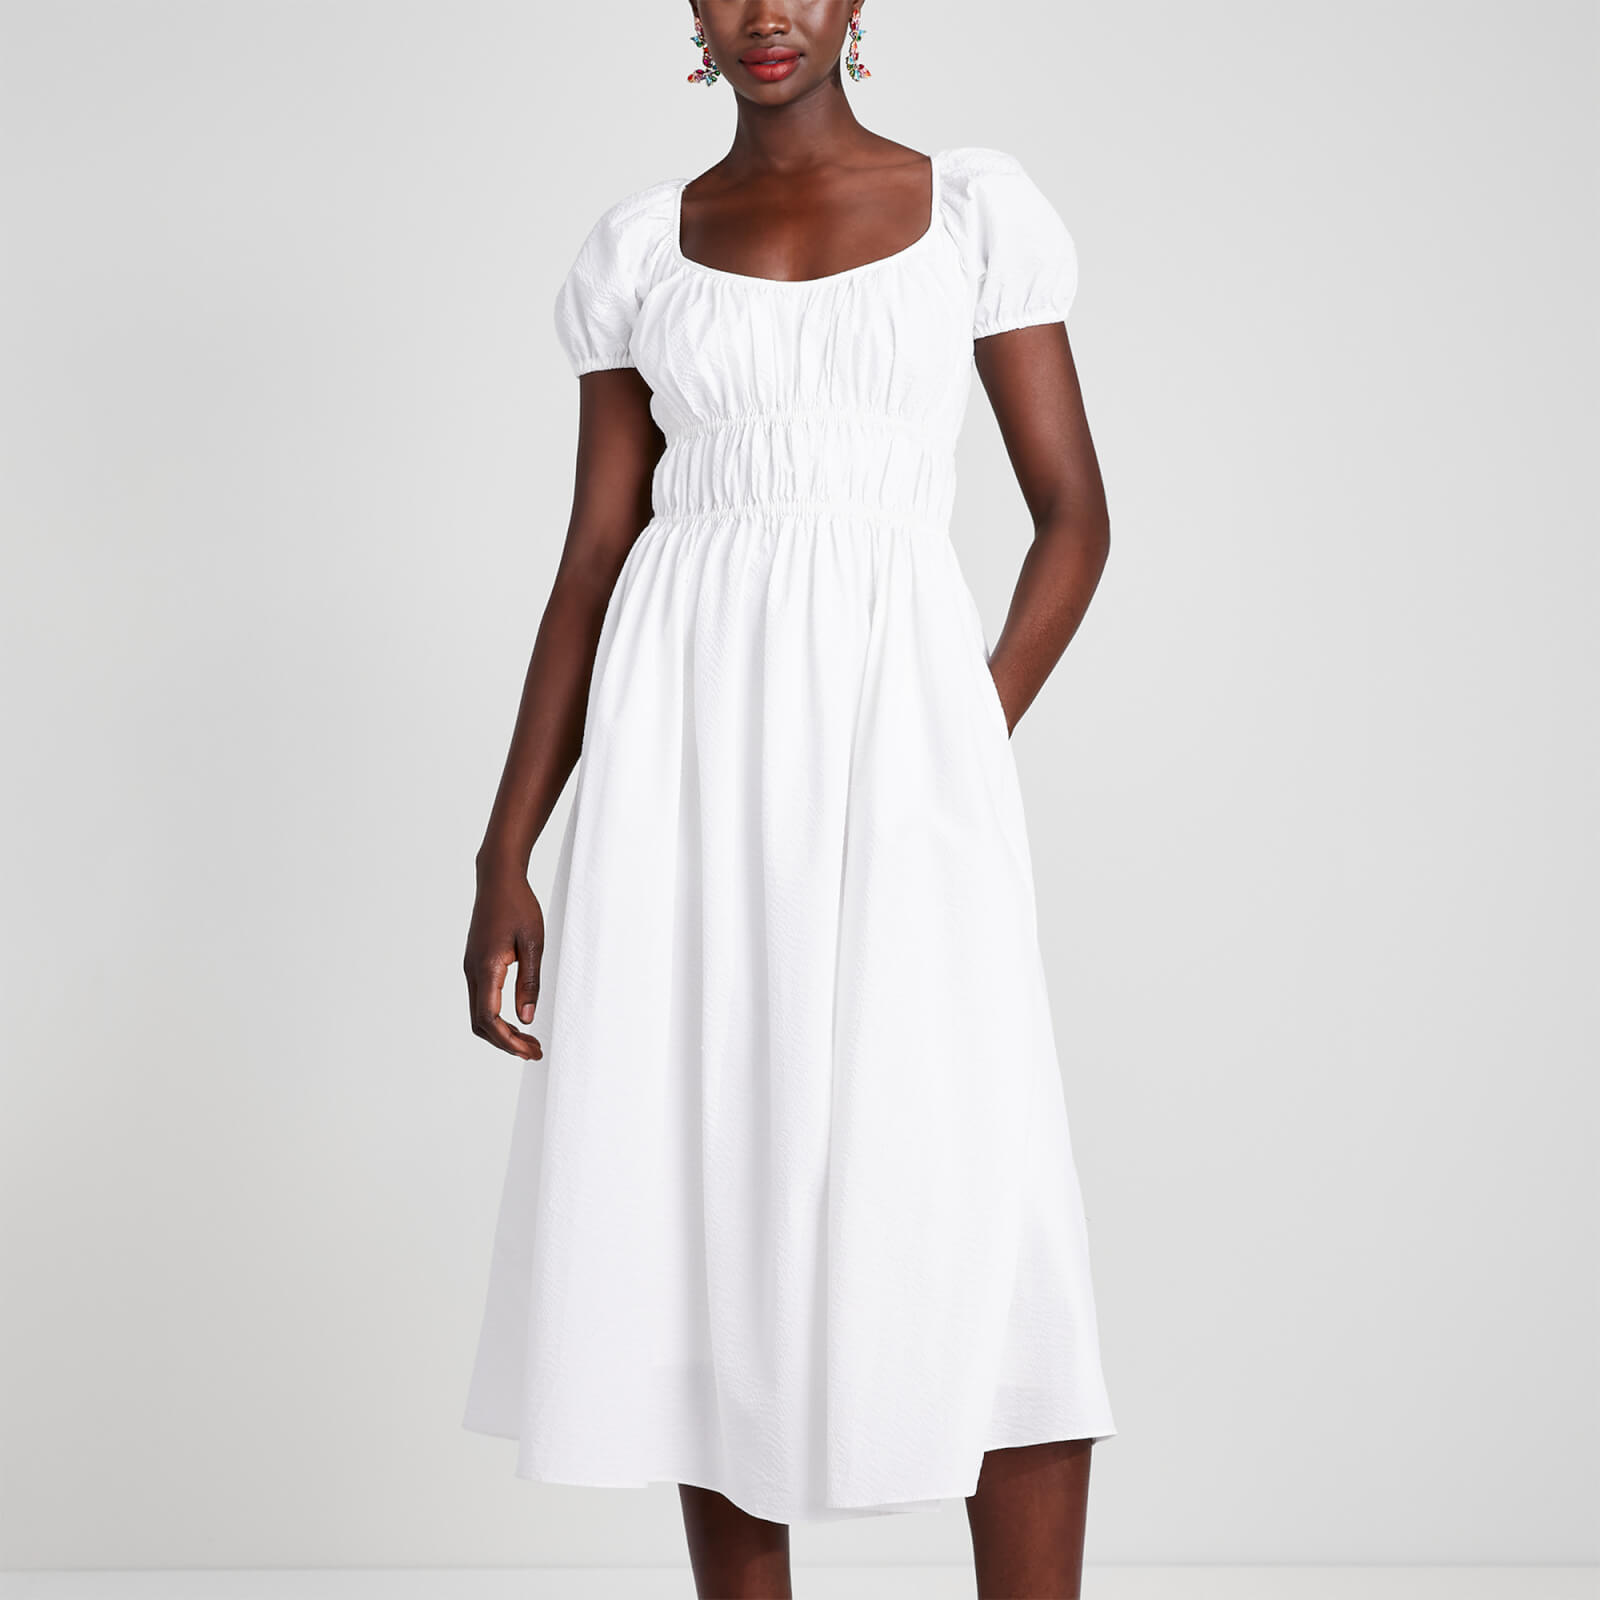 kate spade new york women's seersucker puff sleeve dress - white - s